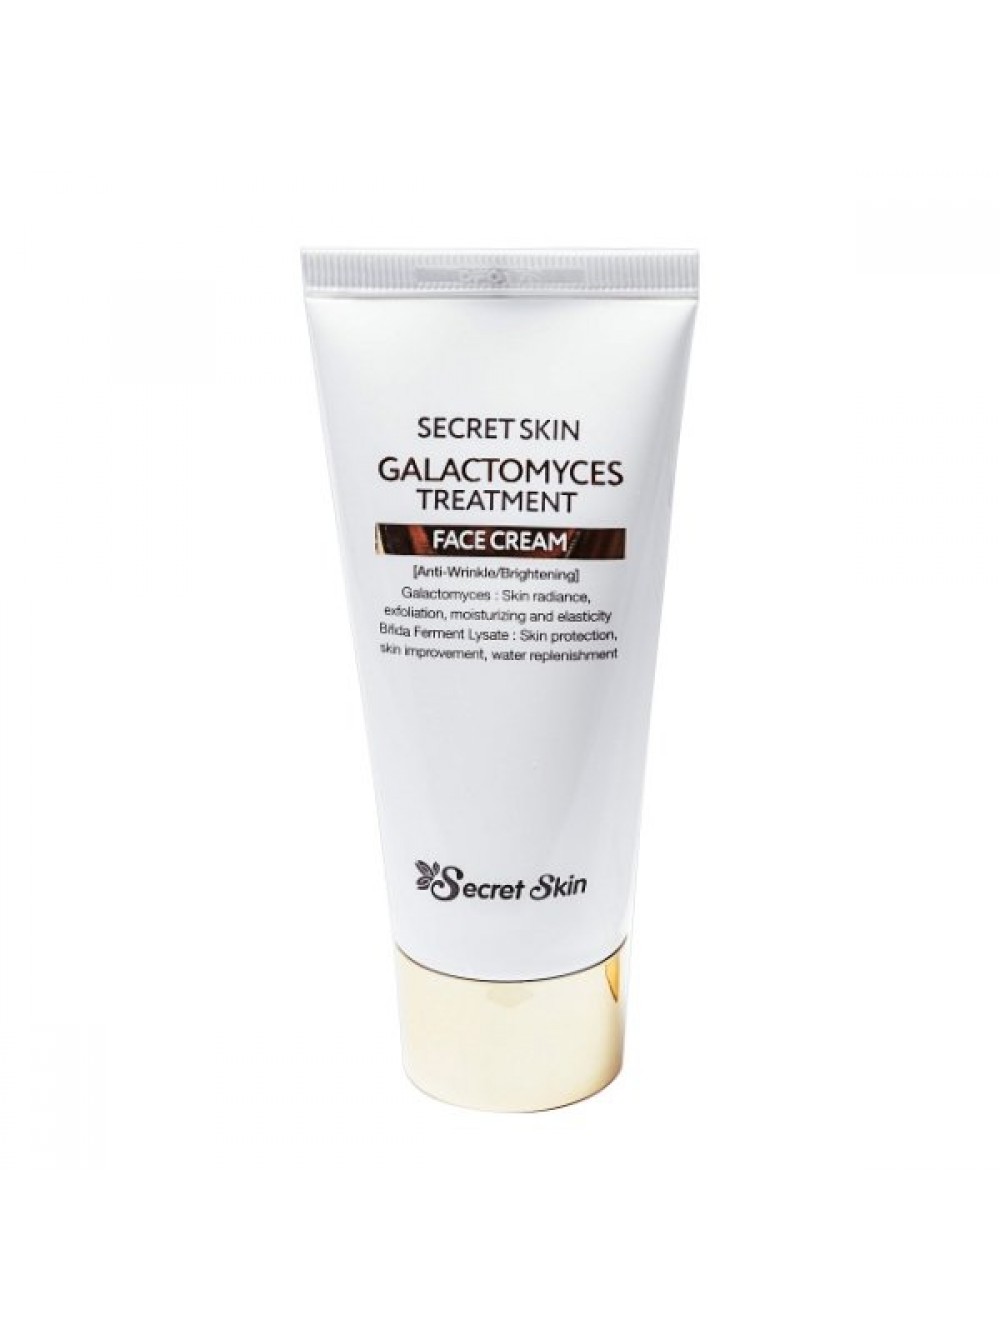 Secret skin крем. SS Galactomyces крем для глаз Secretskin Galactomyces treatment Eye Cream 30гр. Secret Skin крем для рук.